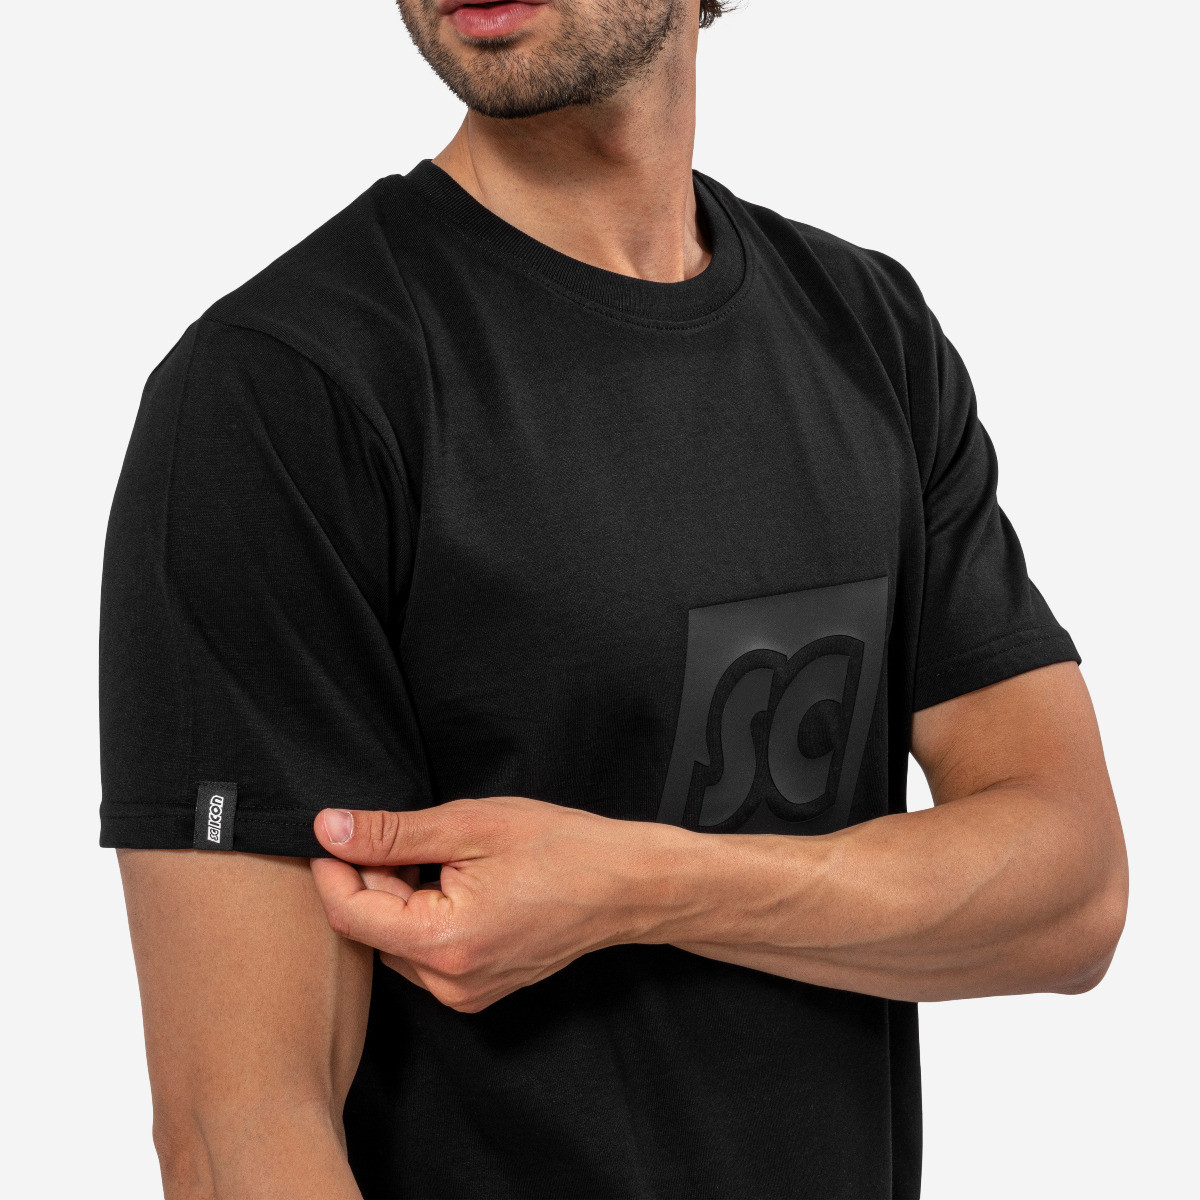 Scicon Sports | SC Monogram Logo Lifestyle Cotton T-shirt - Black - TS61812